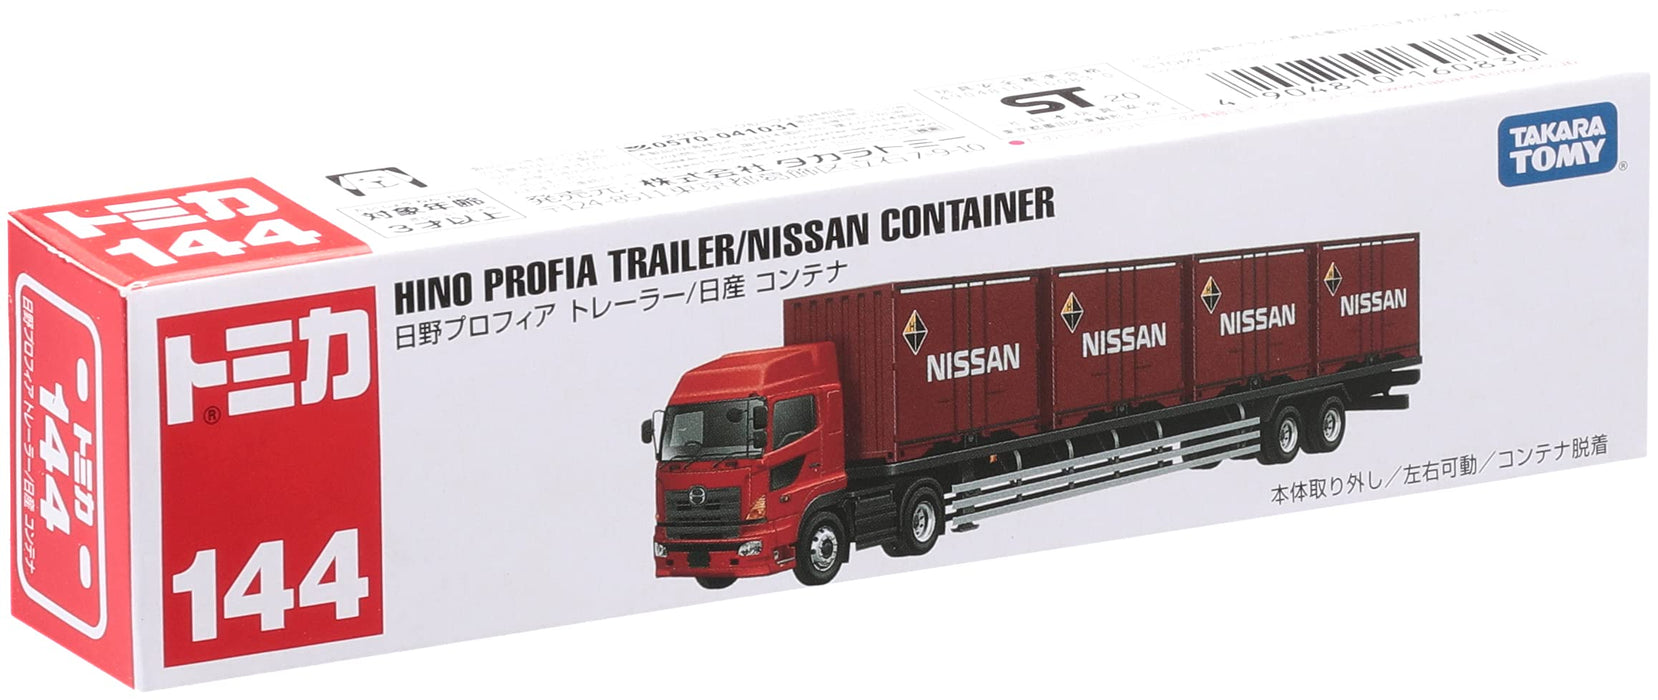 TAKARA TOMY Tomica Hino Profia Trailer/Nissan Container